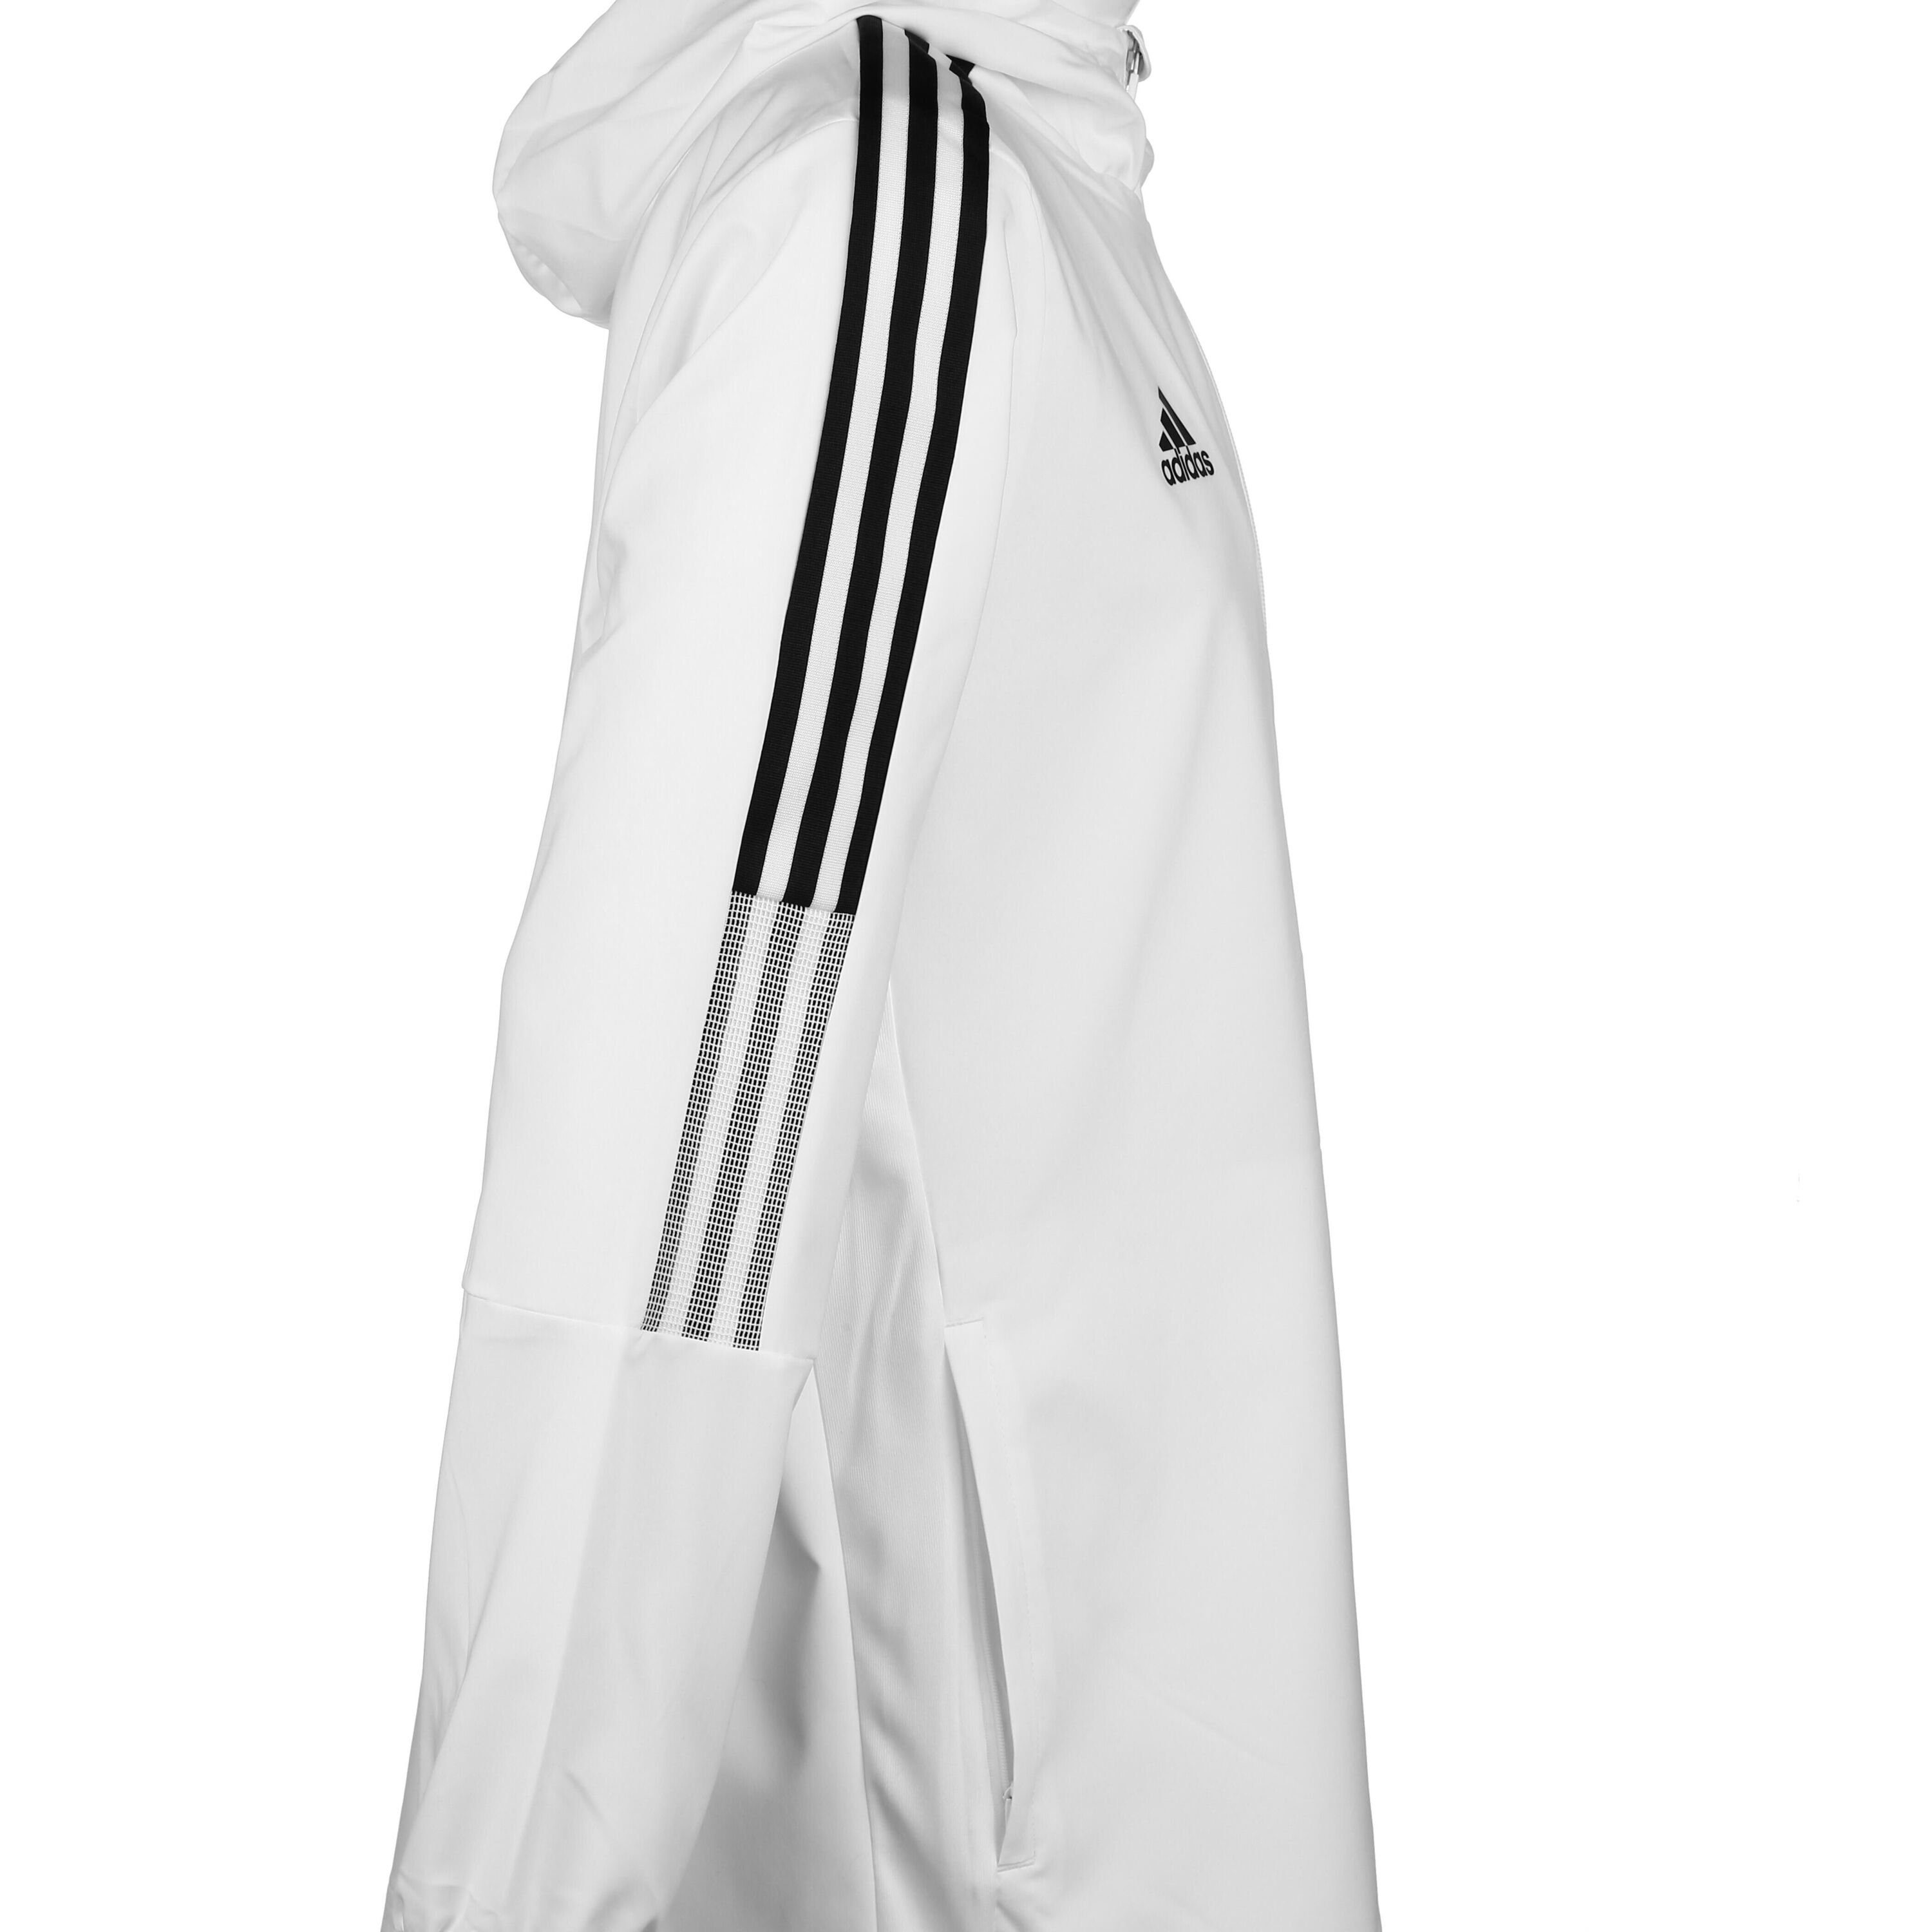 adidas Trainingsjacke Herren schwarz weiß Trainingsjacke Tiro / Performance 21